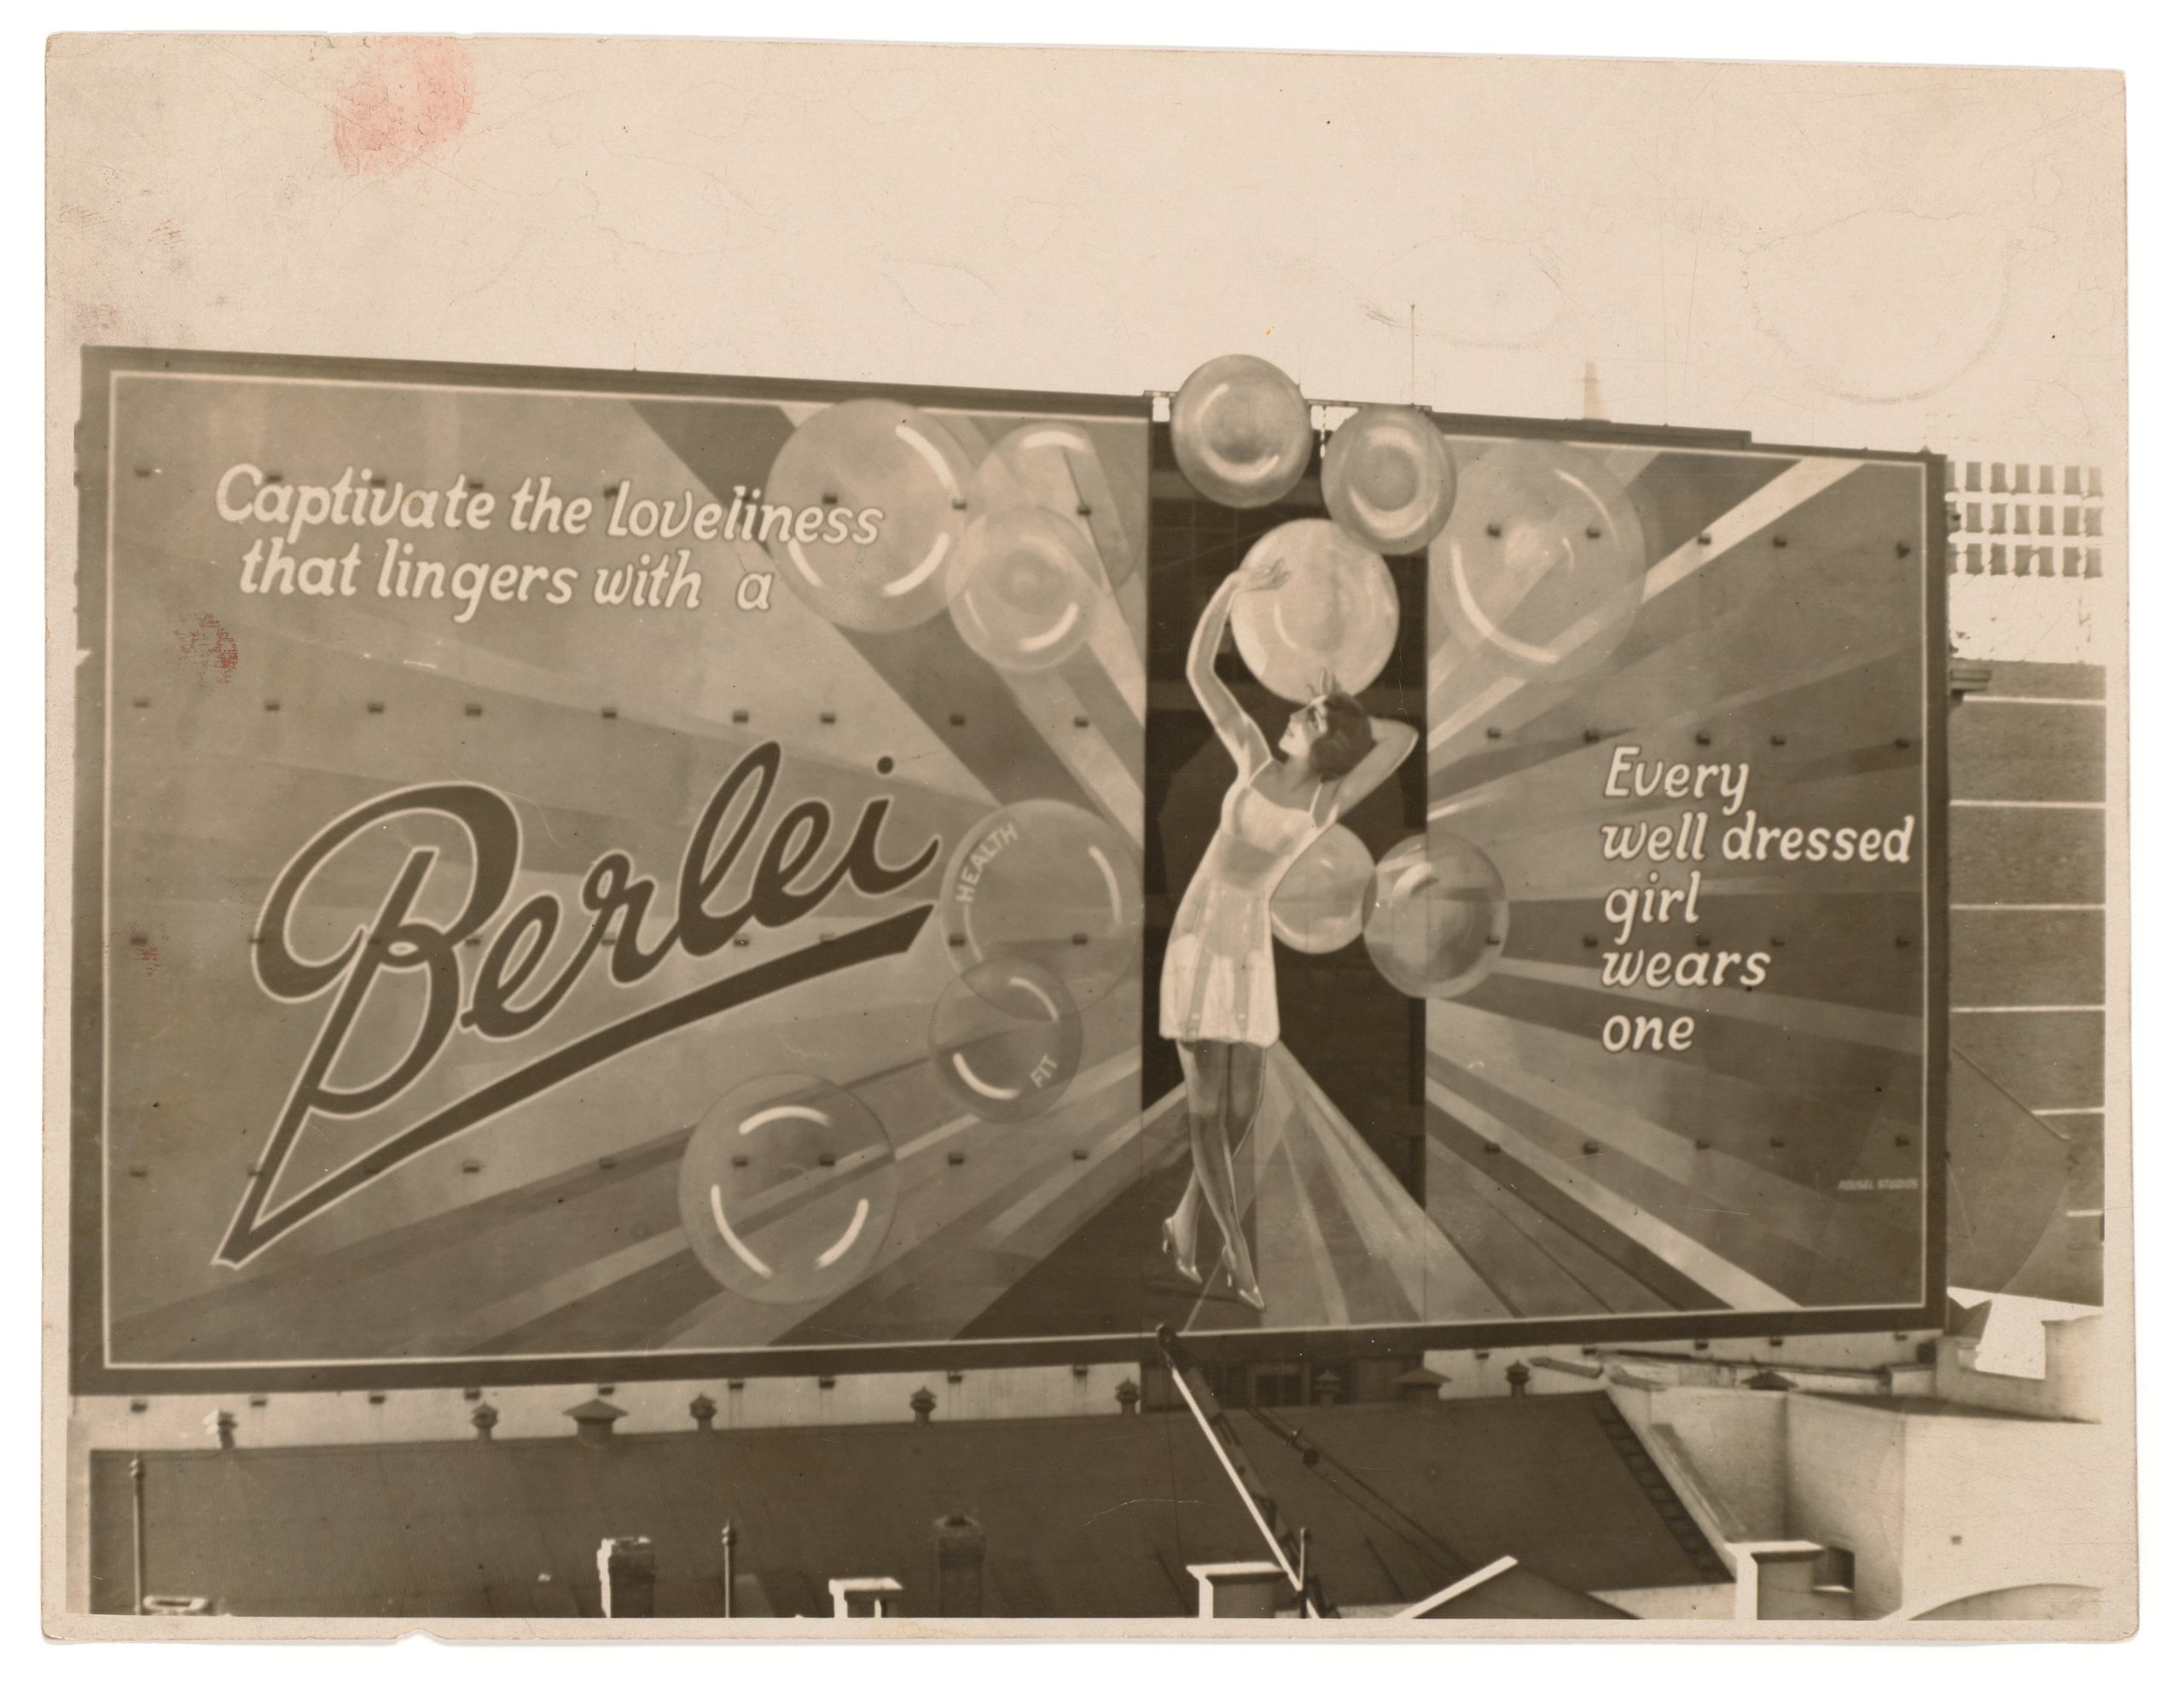 Photograph of advertising billboard for Berlei